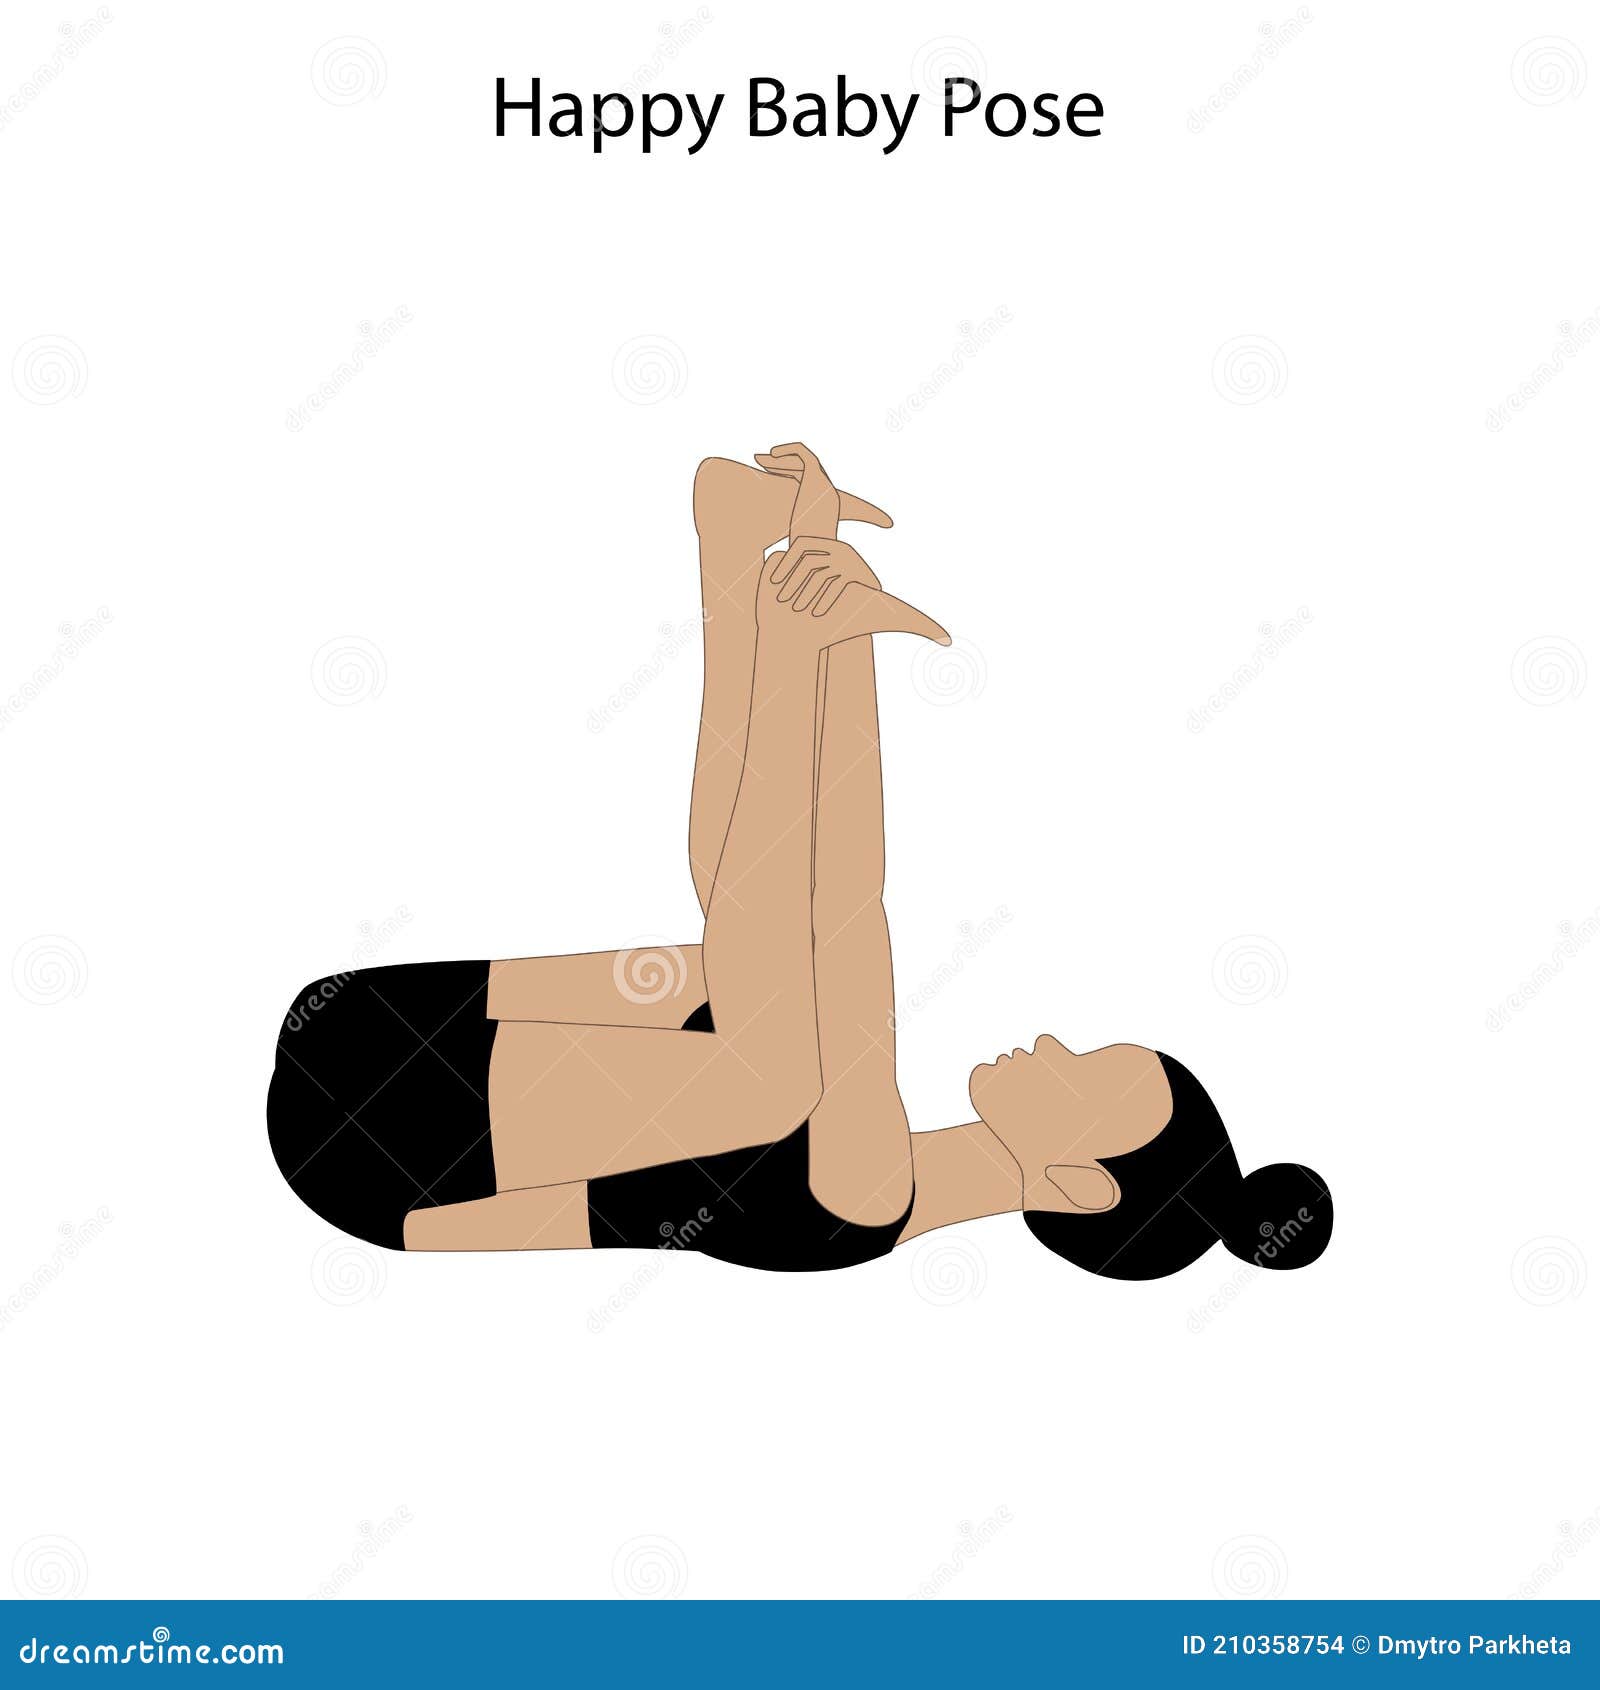 Happy Baby Pose (Ananda Balasana) - Yoga by D